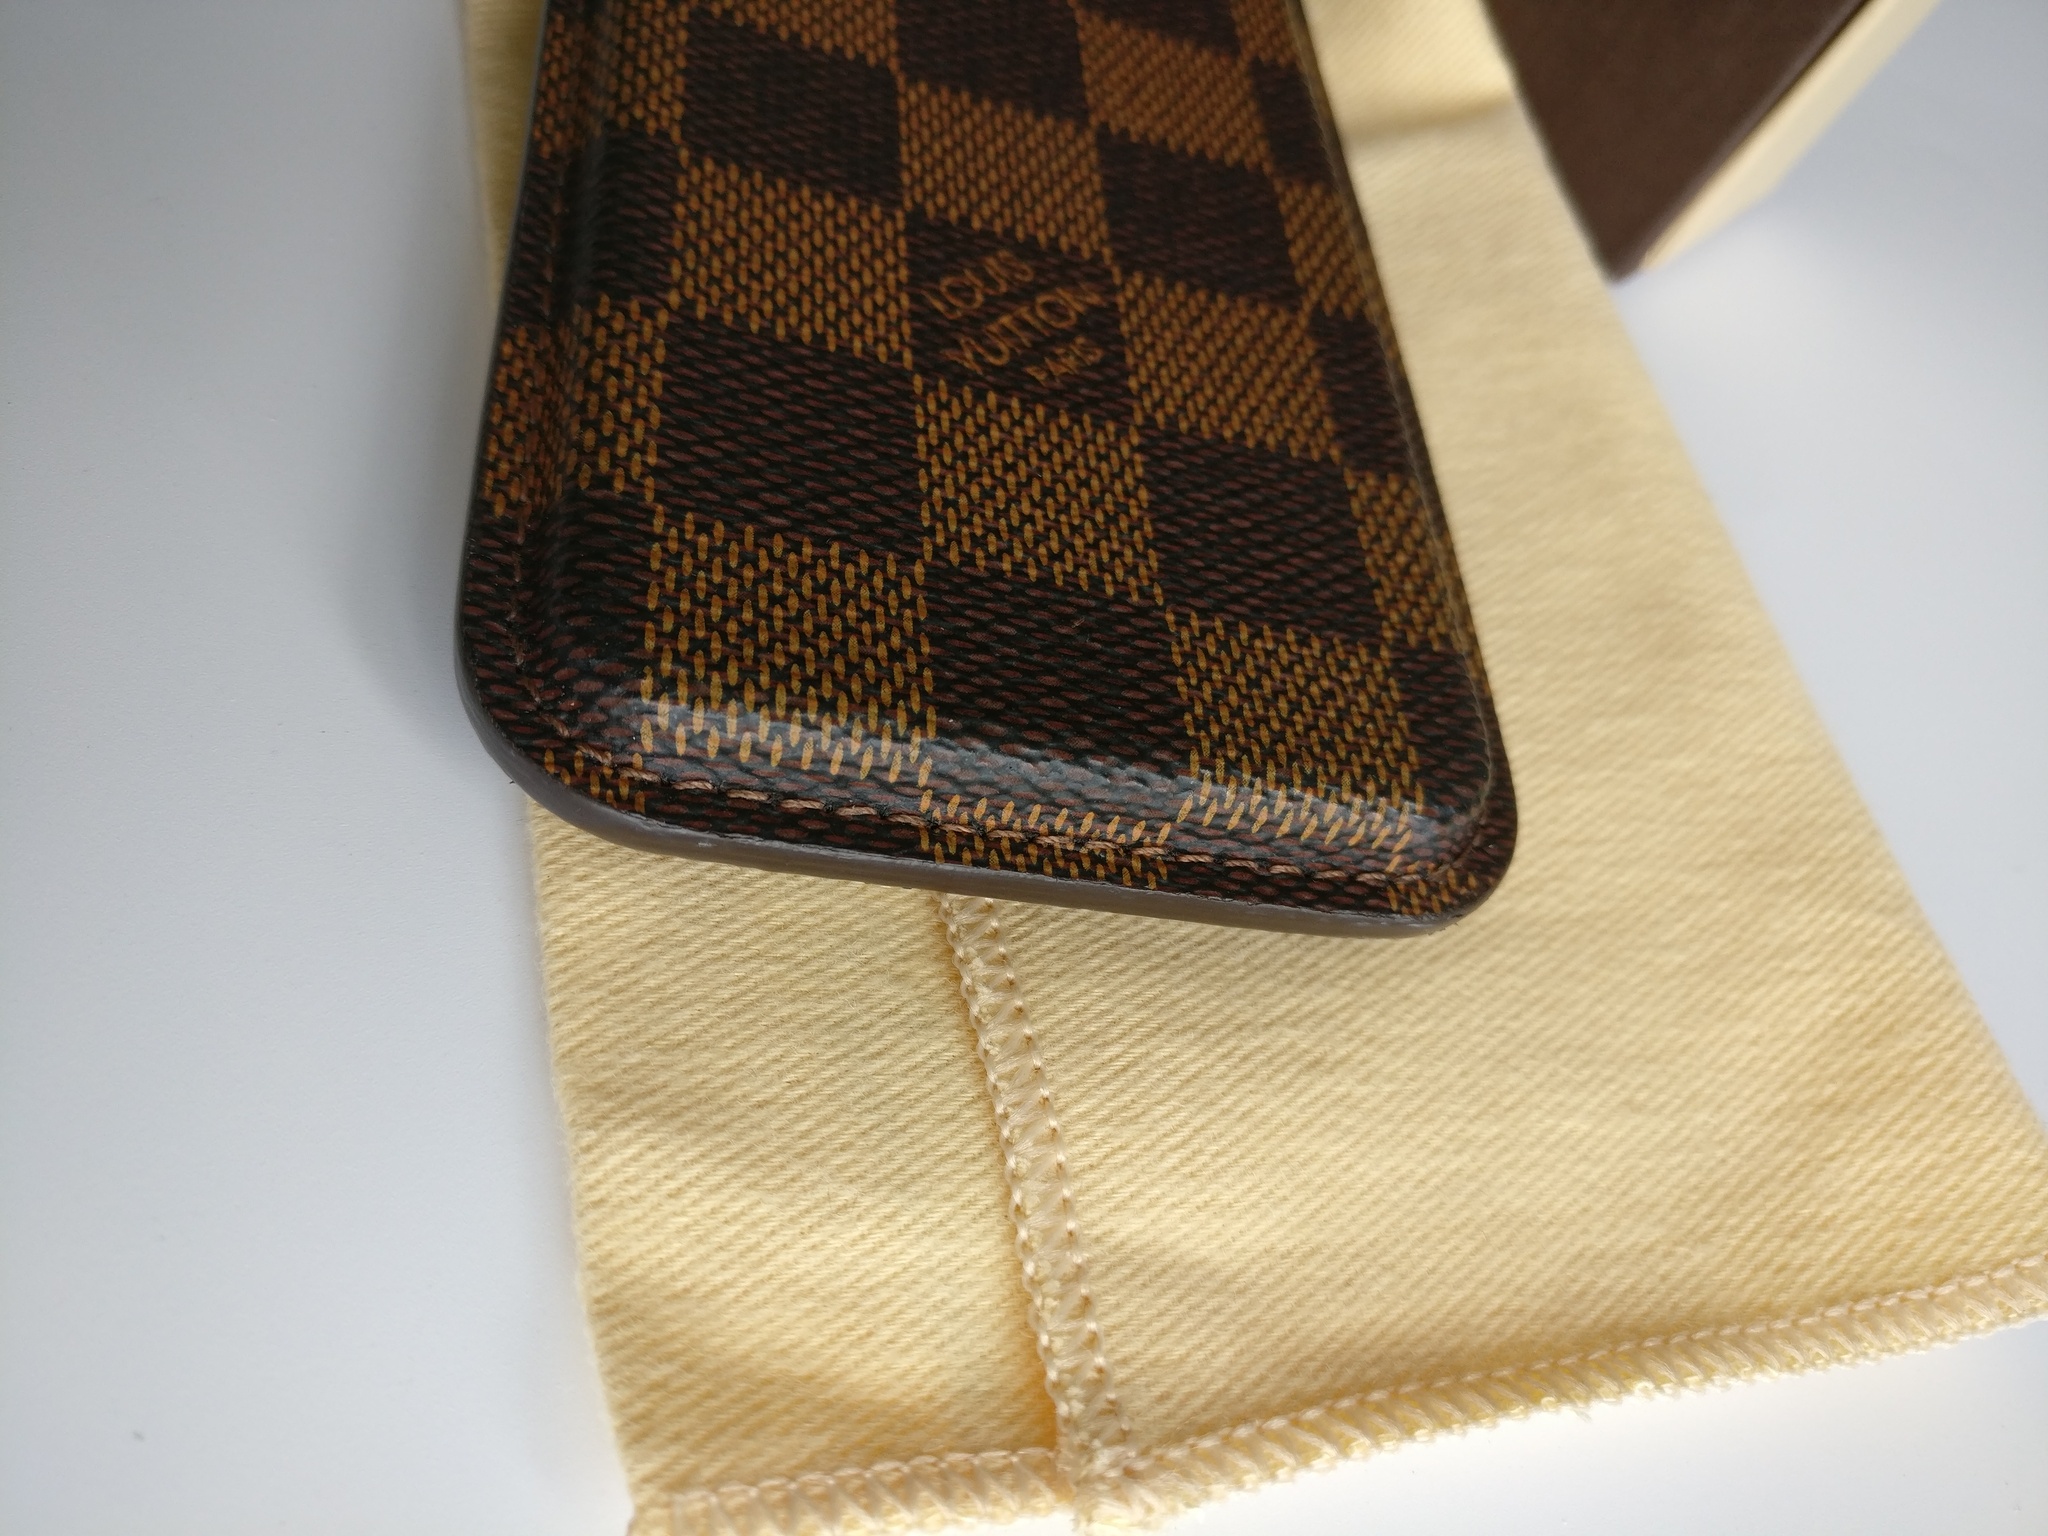 Louis Vuitton phone holder / case